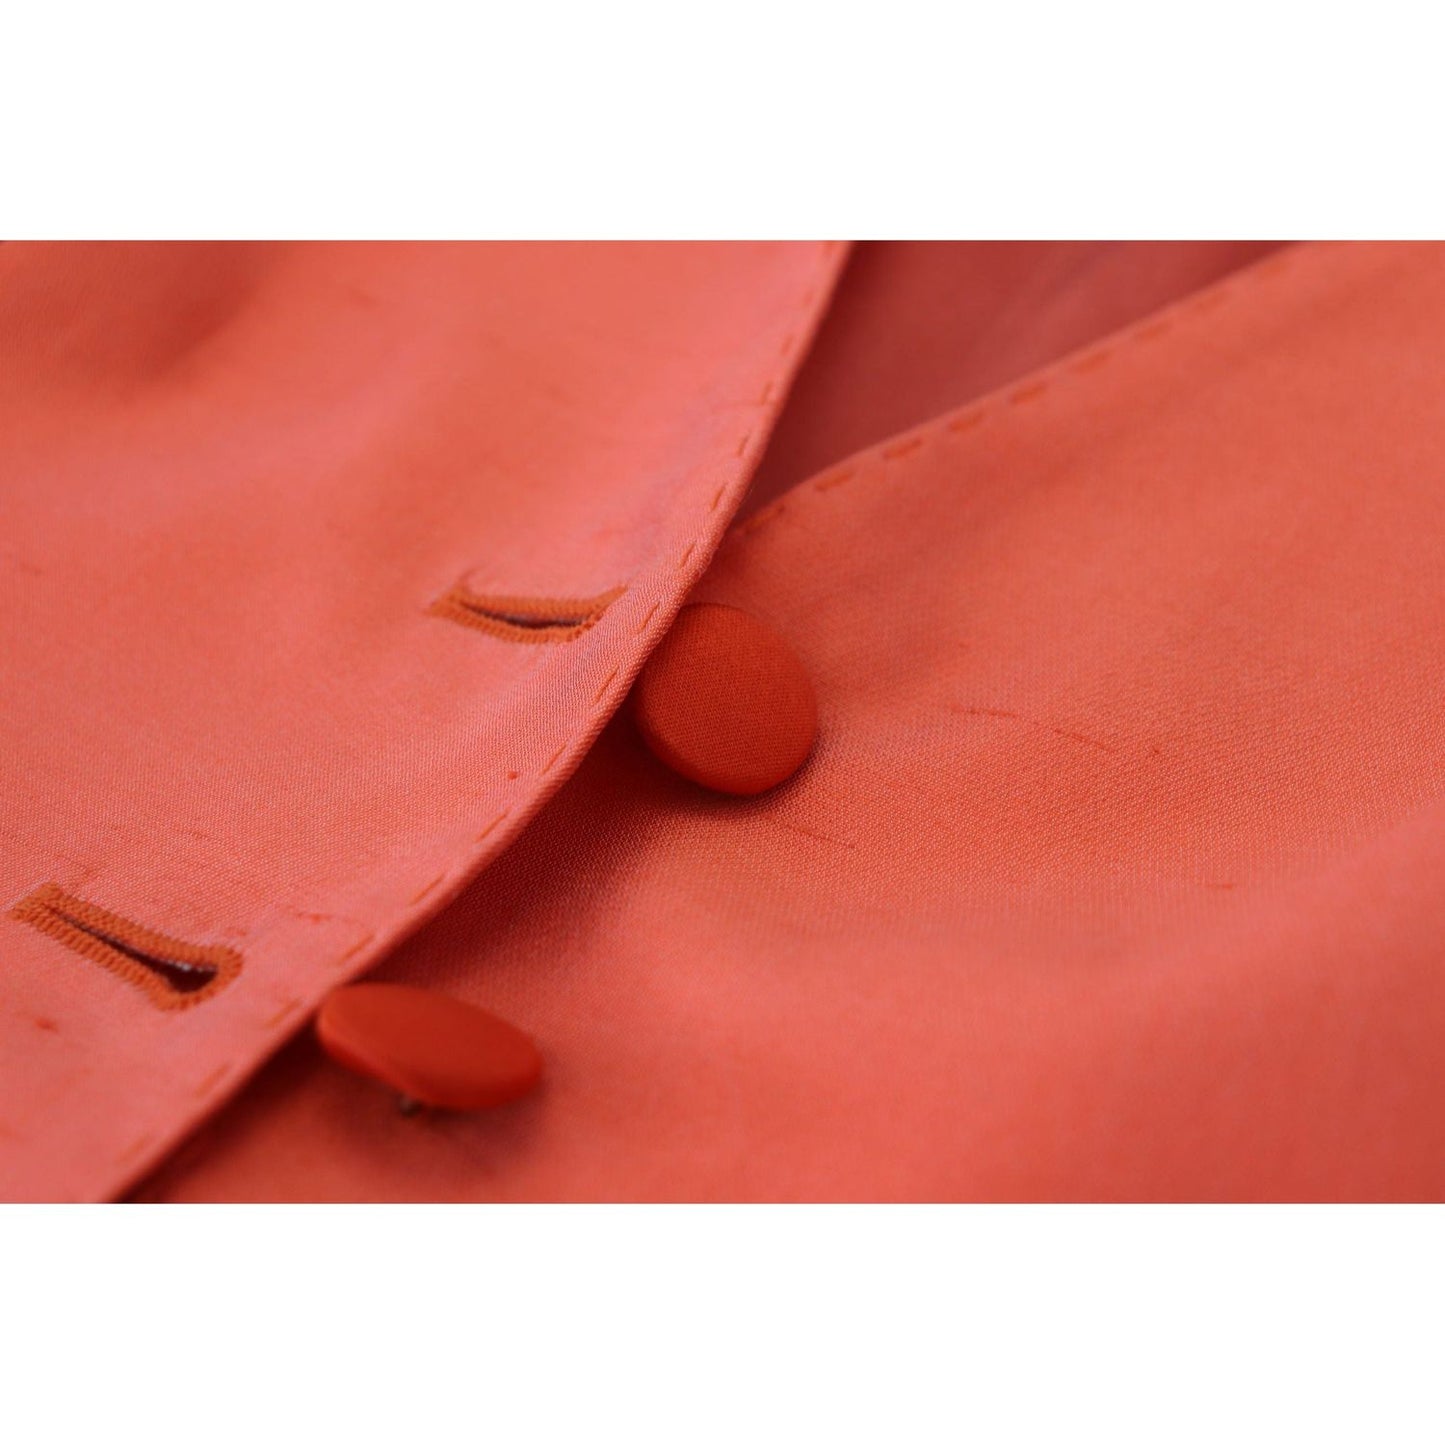 Dolce & Gabbana Elegant Orange Silk Waistcoat orange-sleeveless-waistcoat-cropped-vest-top